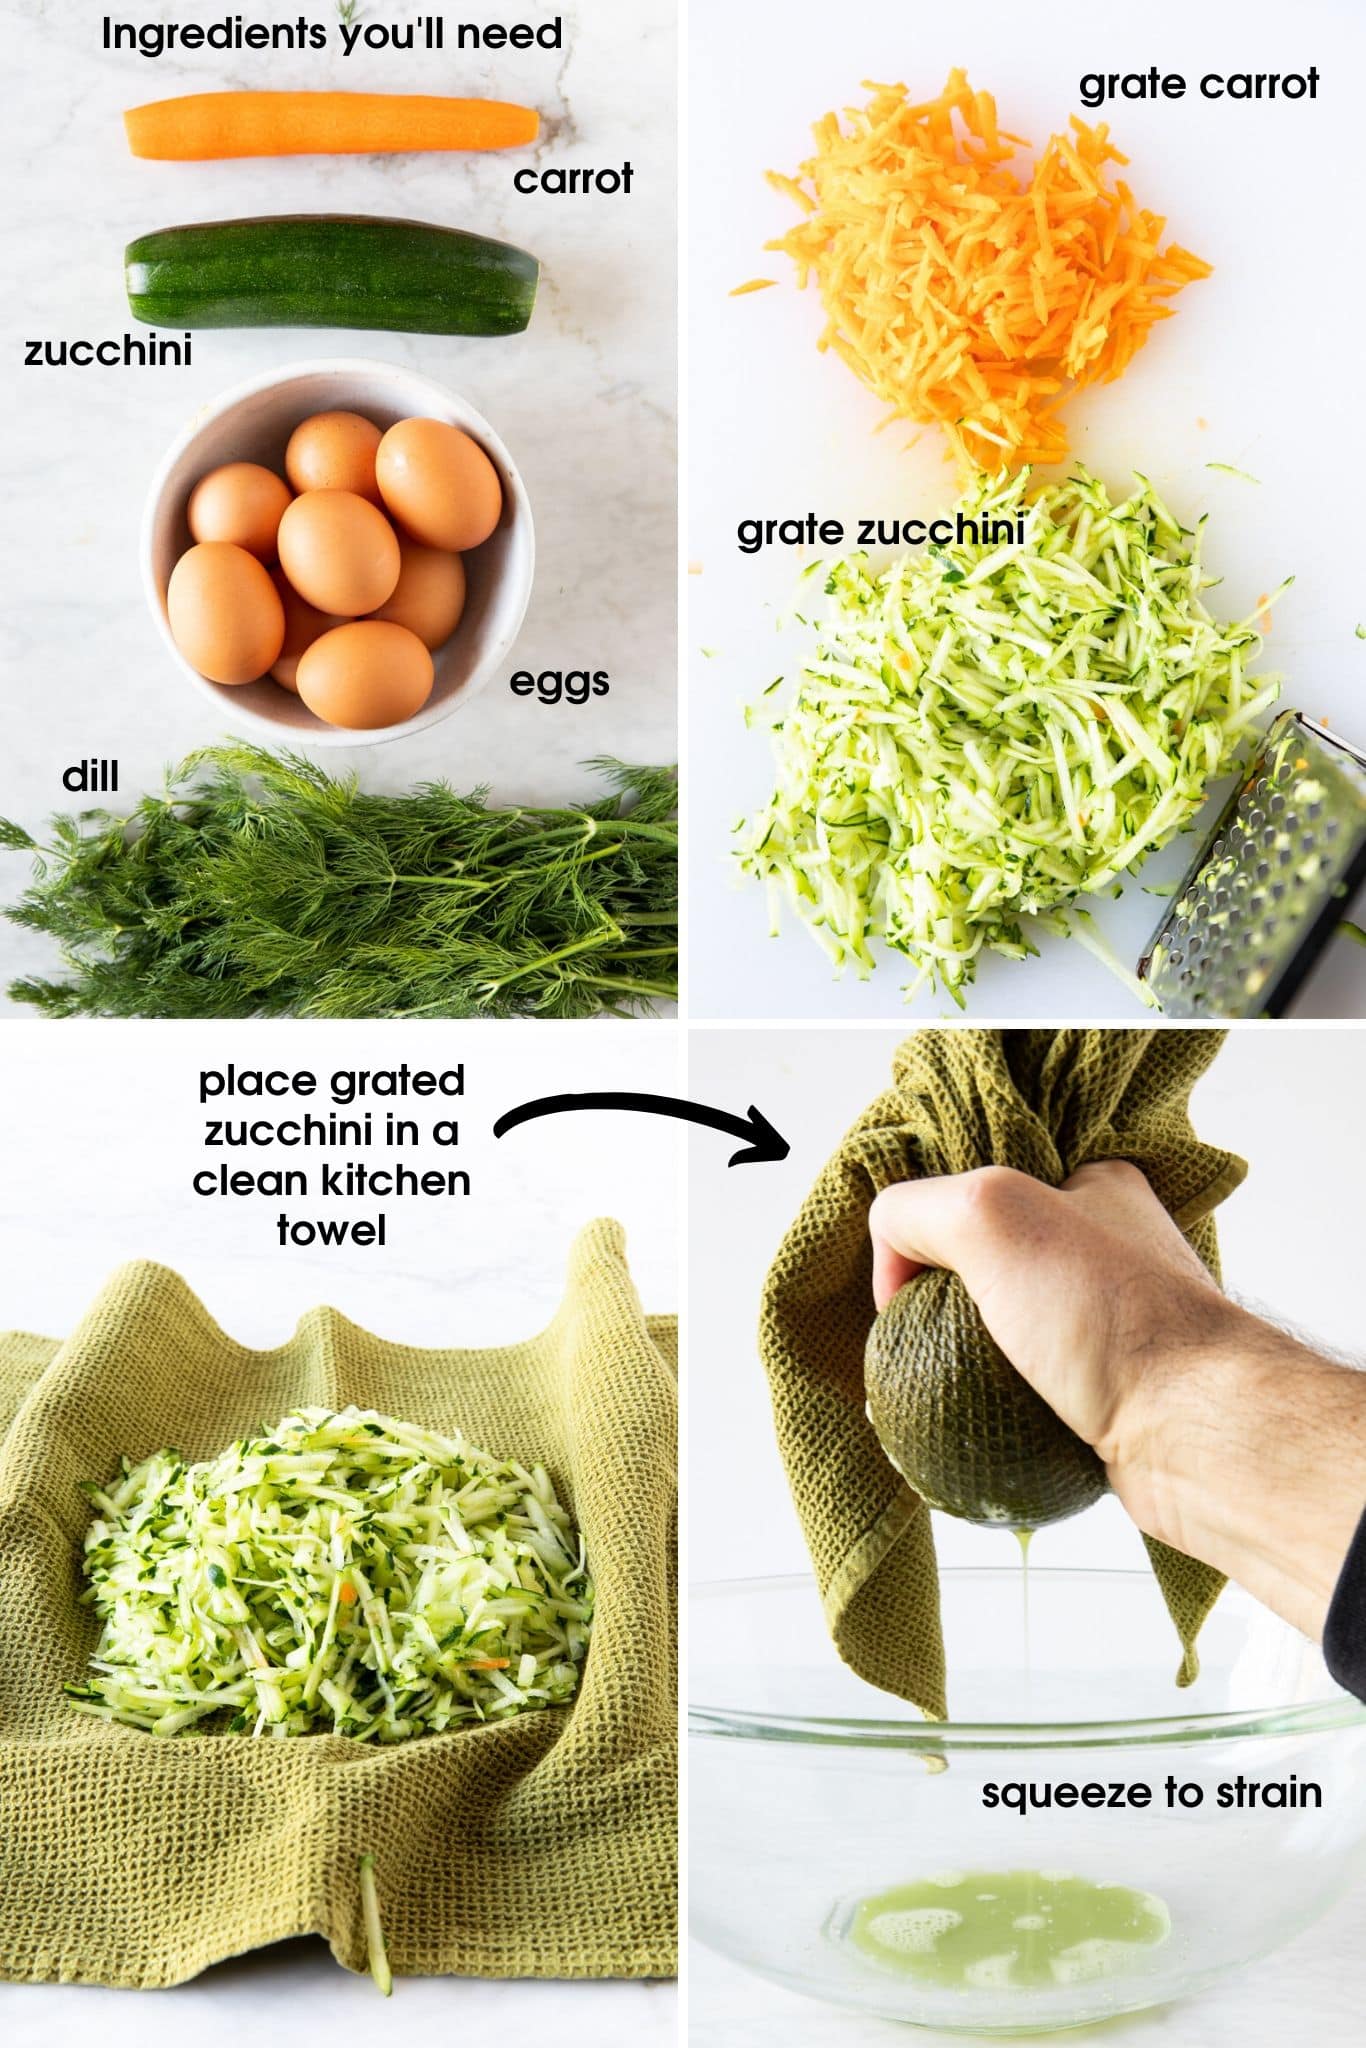 Steps to make crustless carrot zucchini quiche